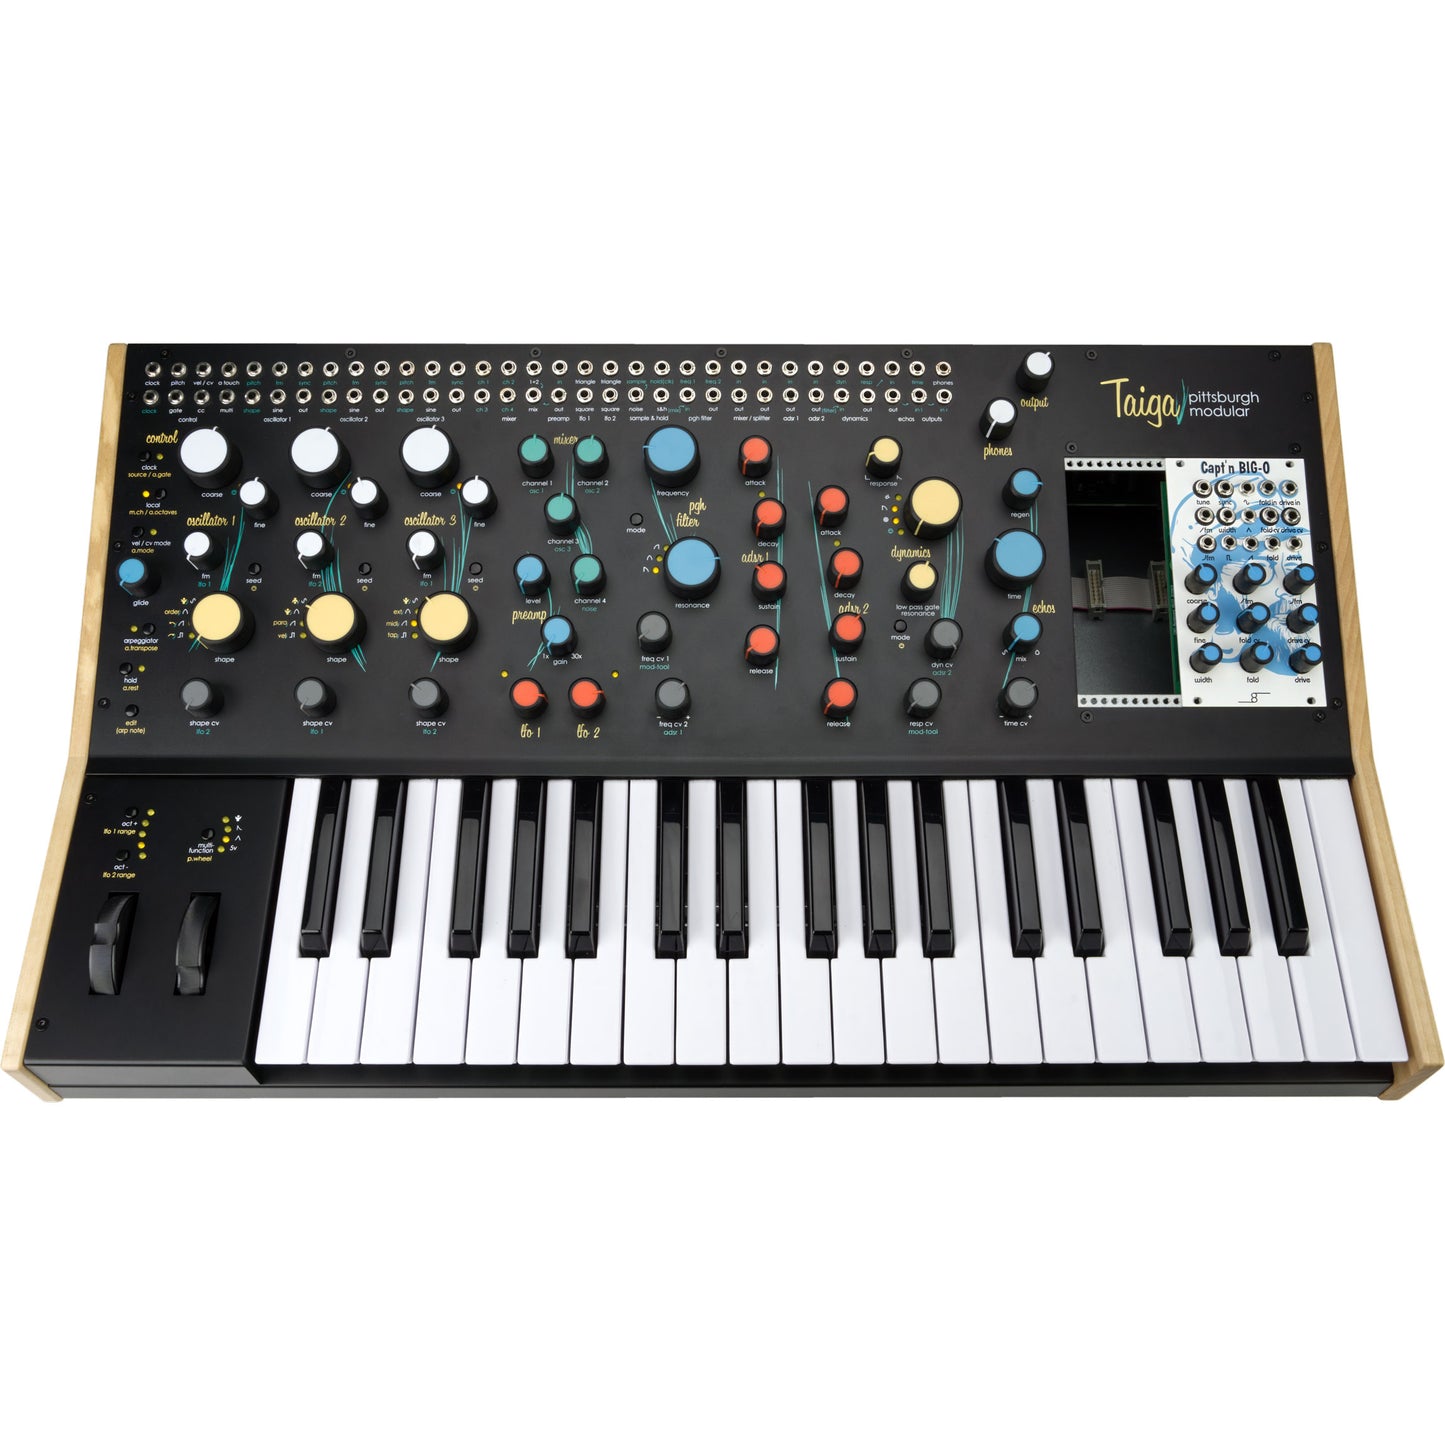 Pittsburgh Modular Synthesizers Taiga Keyboard Analog Synthesizer